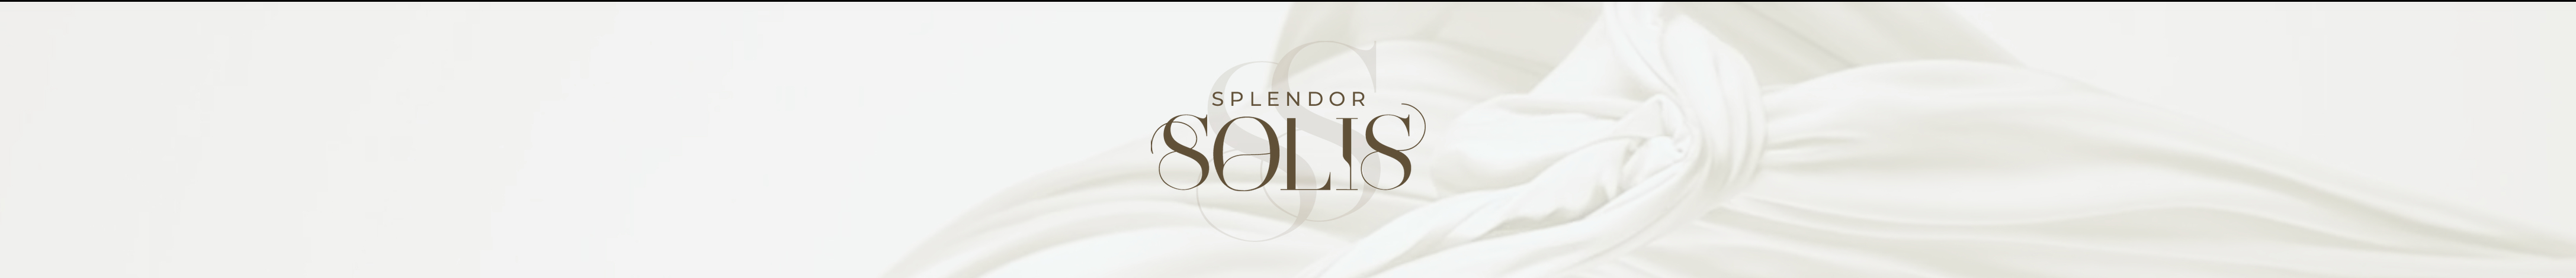 Splendor Solis's profile banner